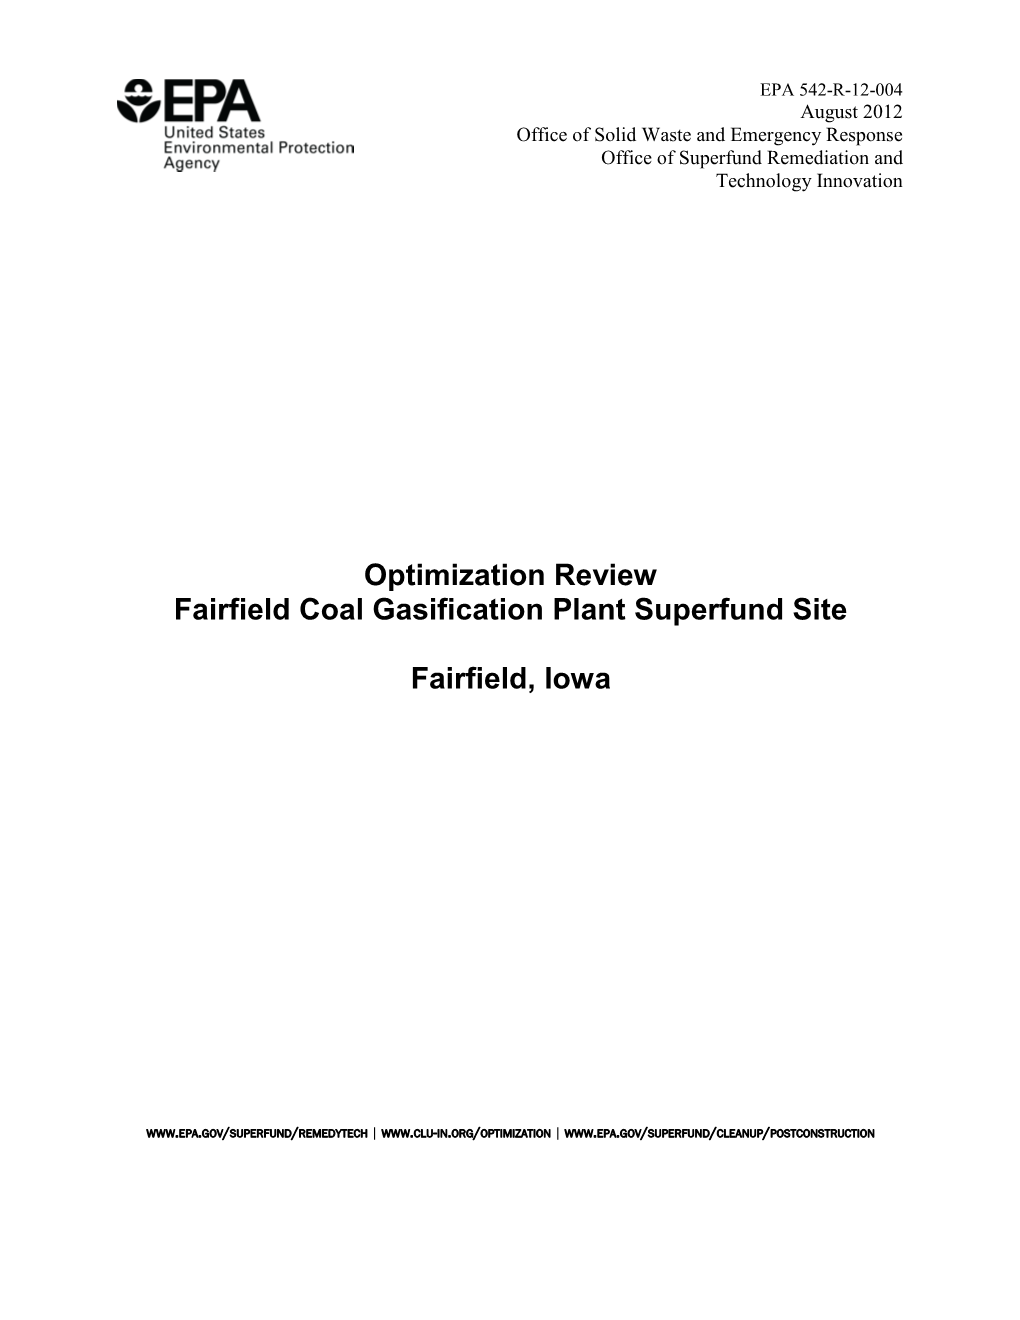 Optimization Review: Fairfield Coal Gasification Plant Superfund Site, Fairfield, Iowa